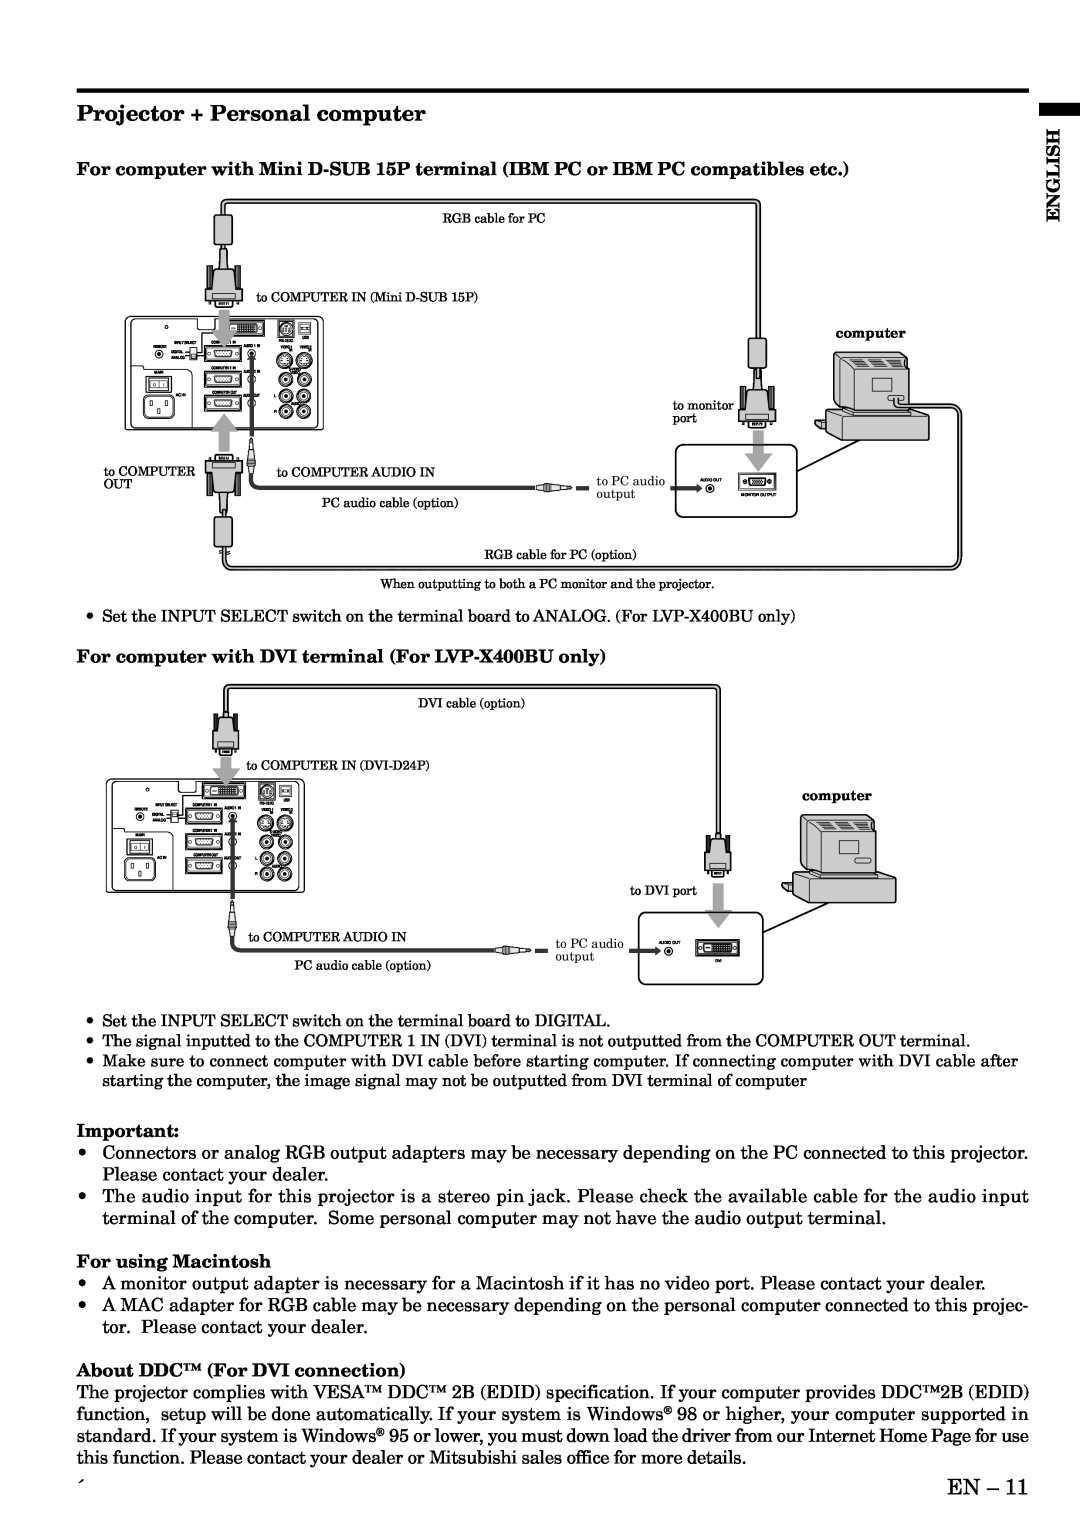 Mitsubishi Electronics LVP-X400BU user manual Projector + Personal computer, English, For using Macintosh 